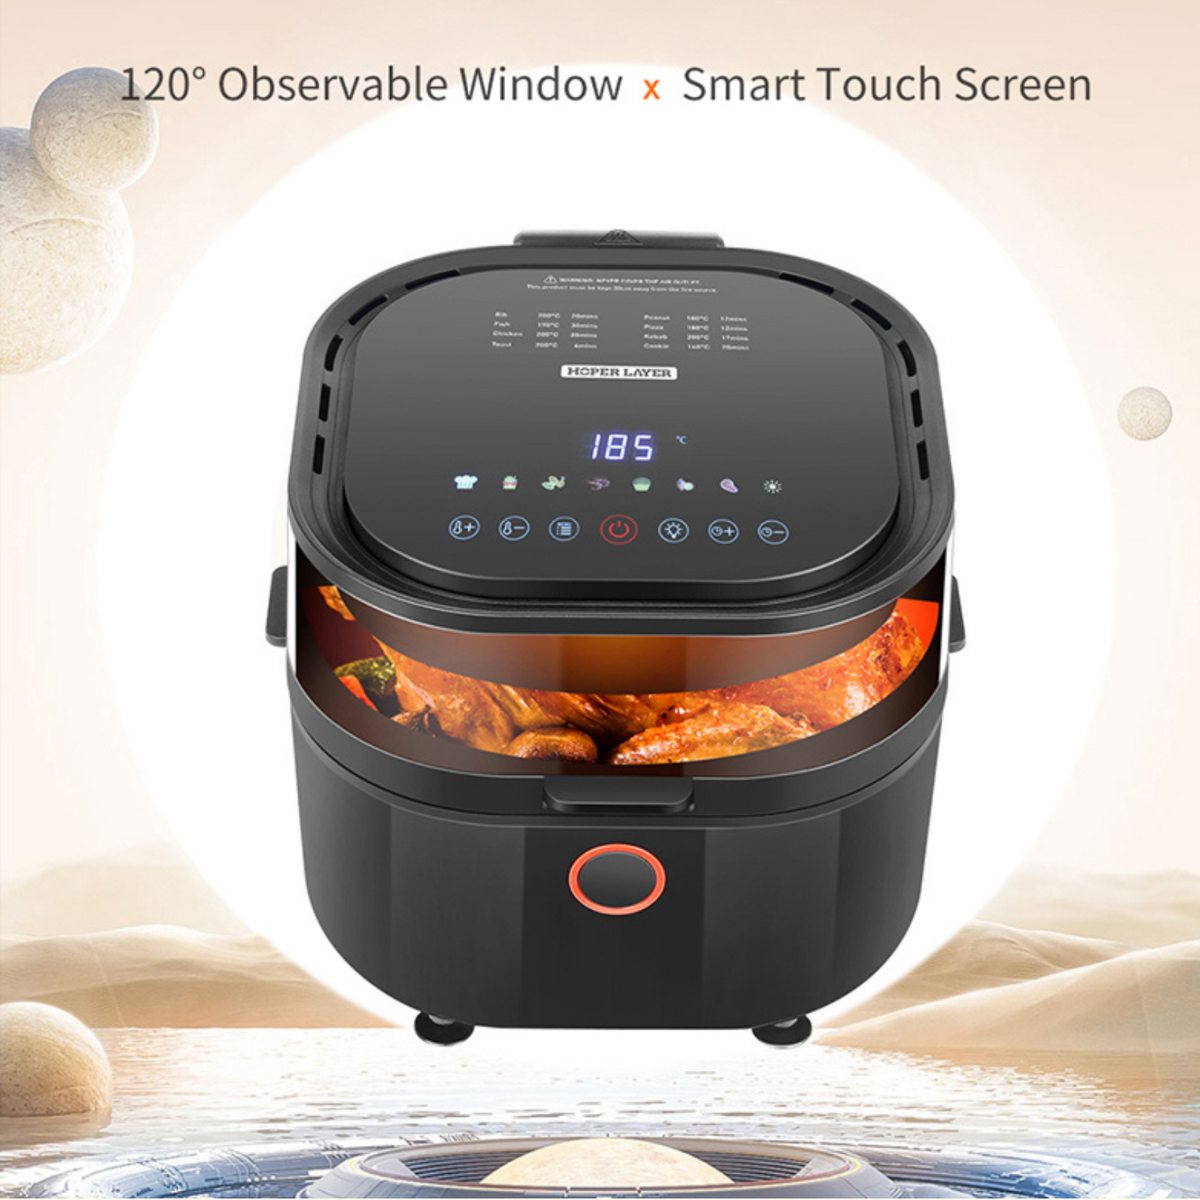 120° Observable Window x Smart Touch Screen of air fryers